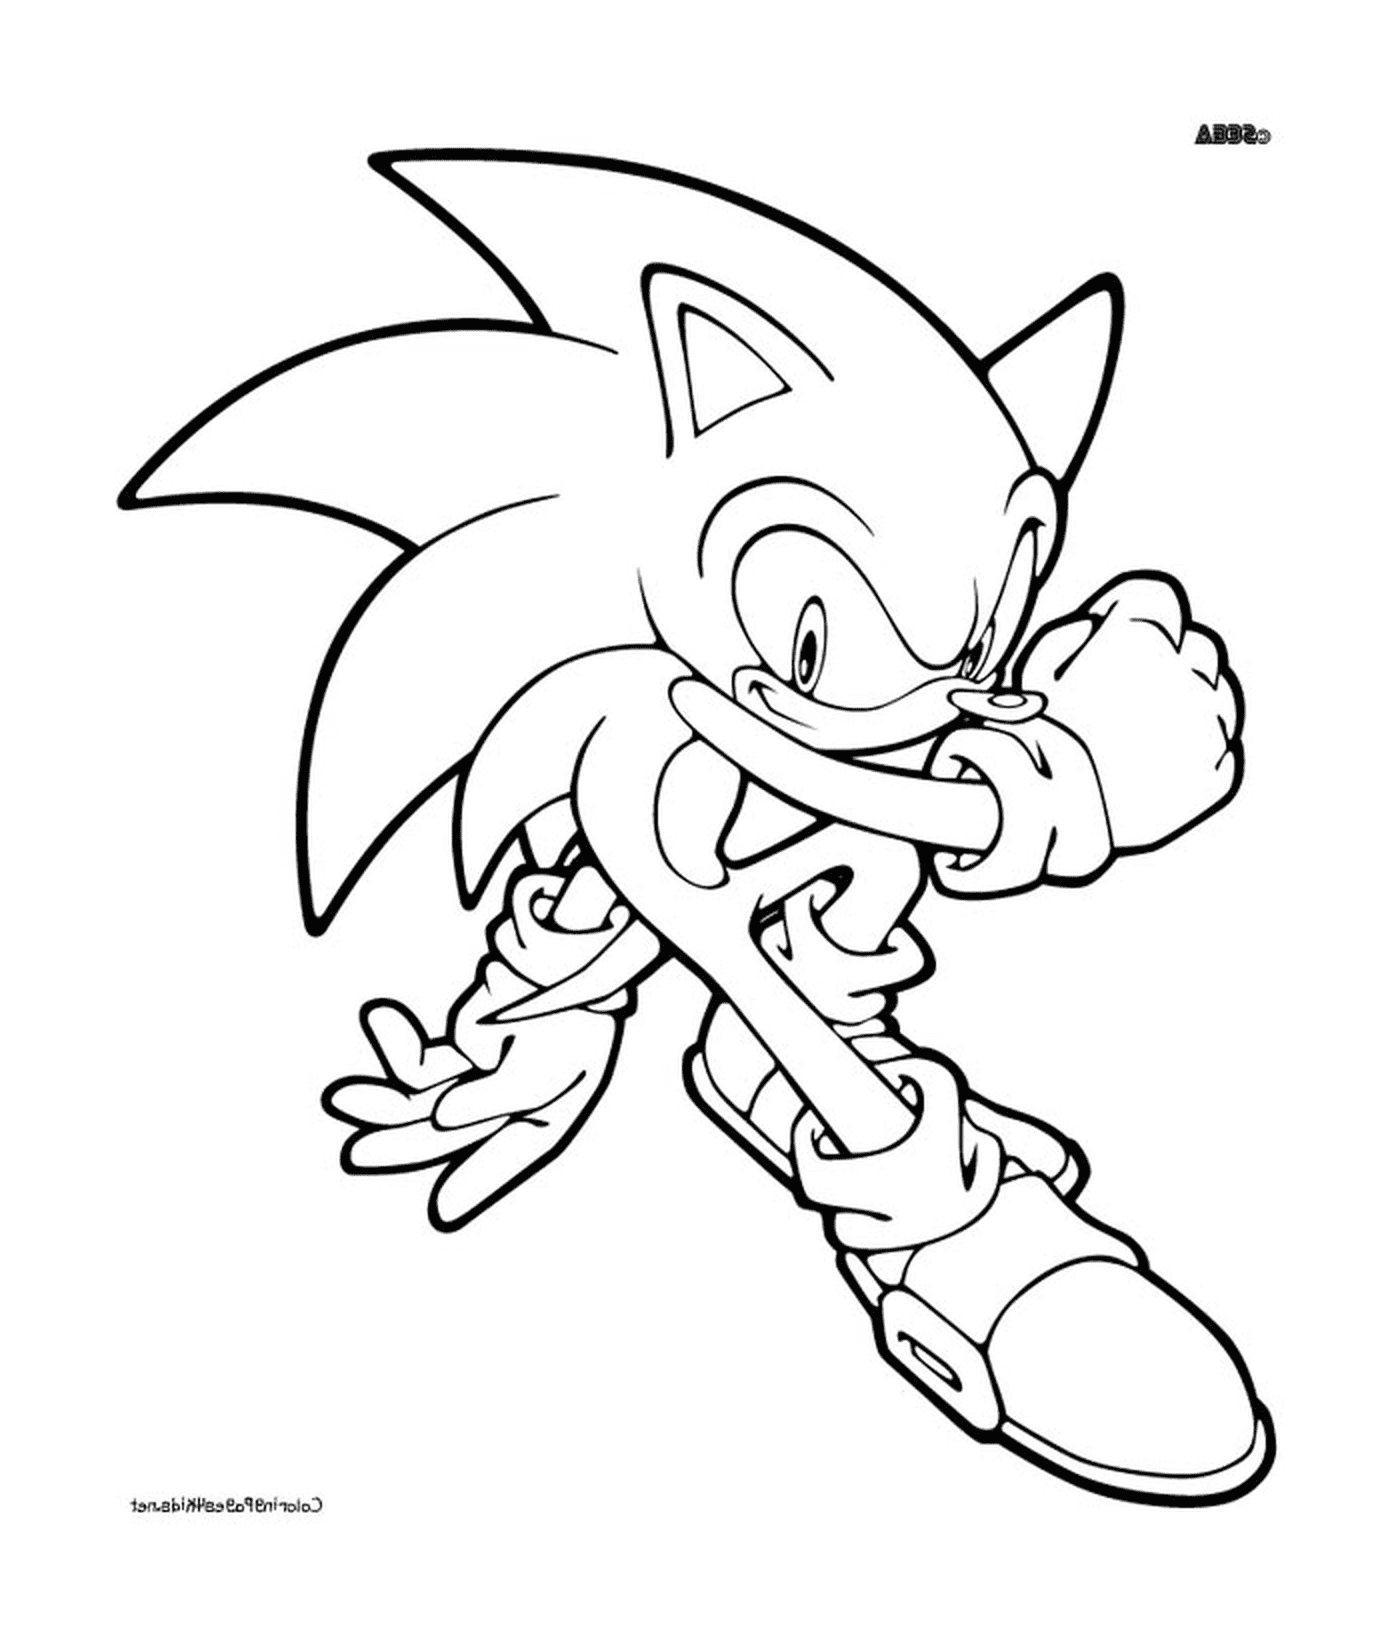  Super energetic Sonic 